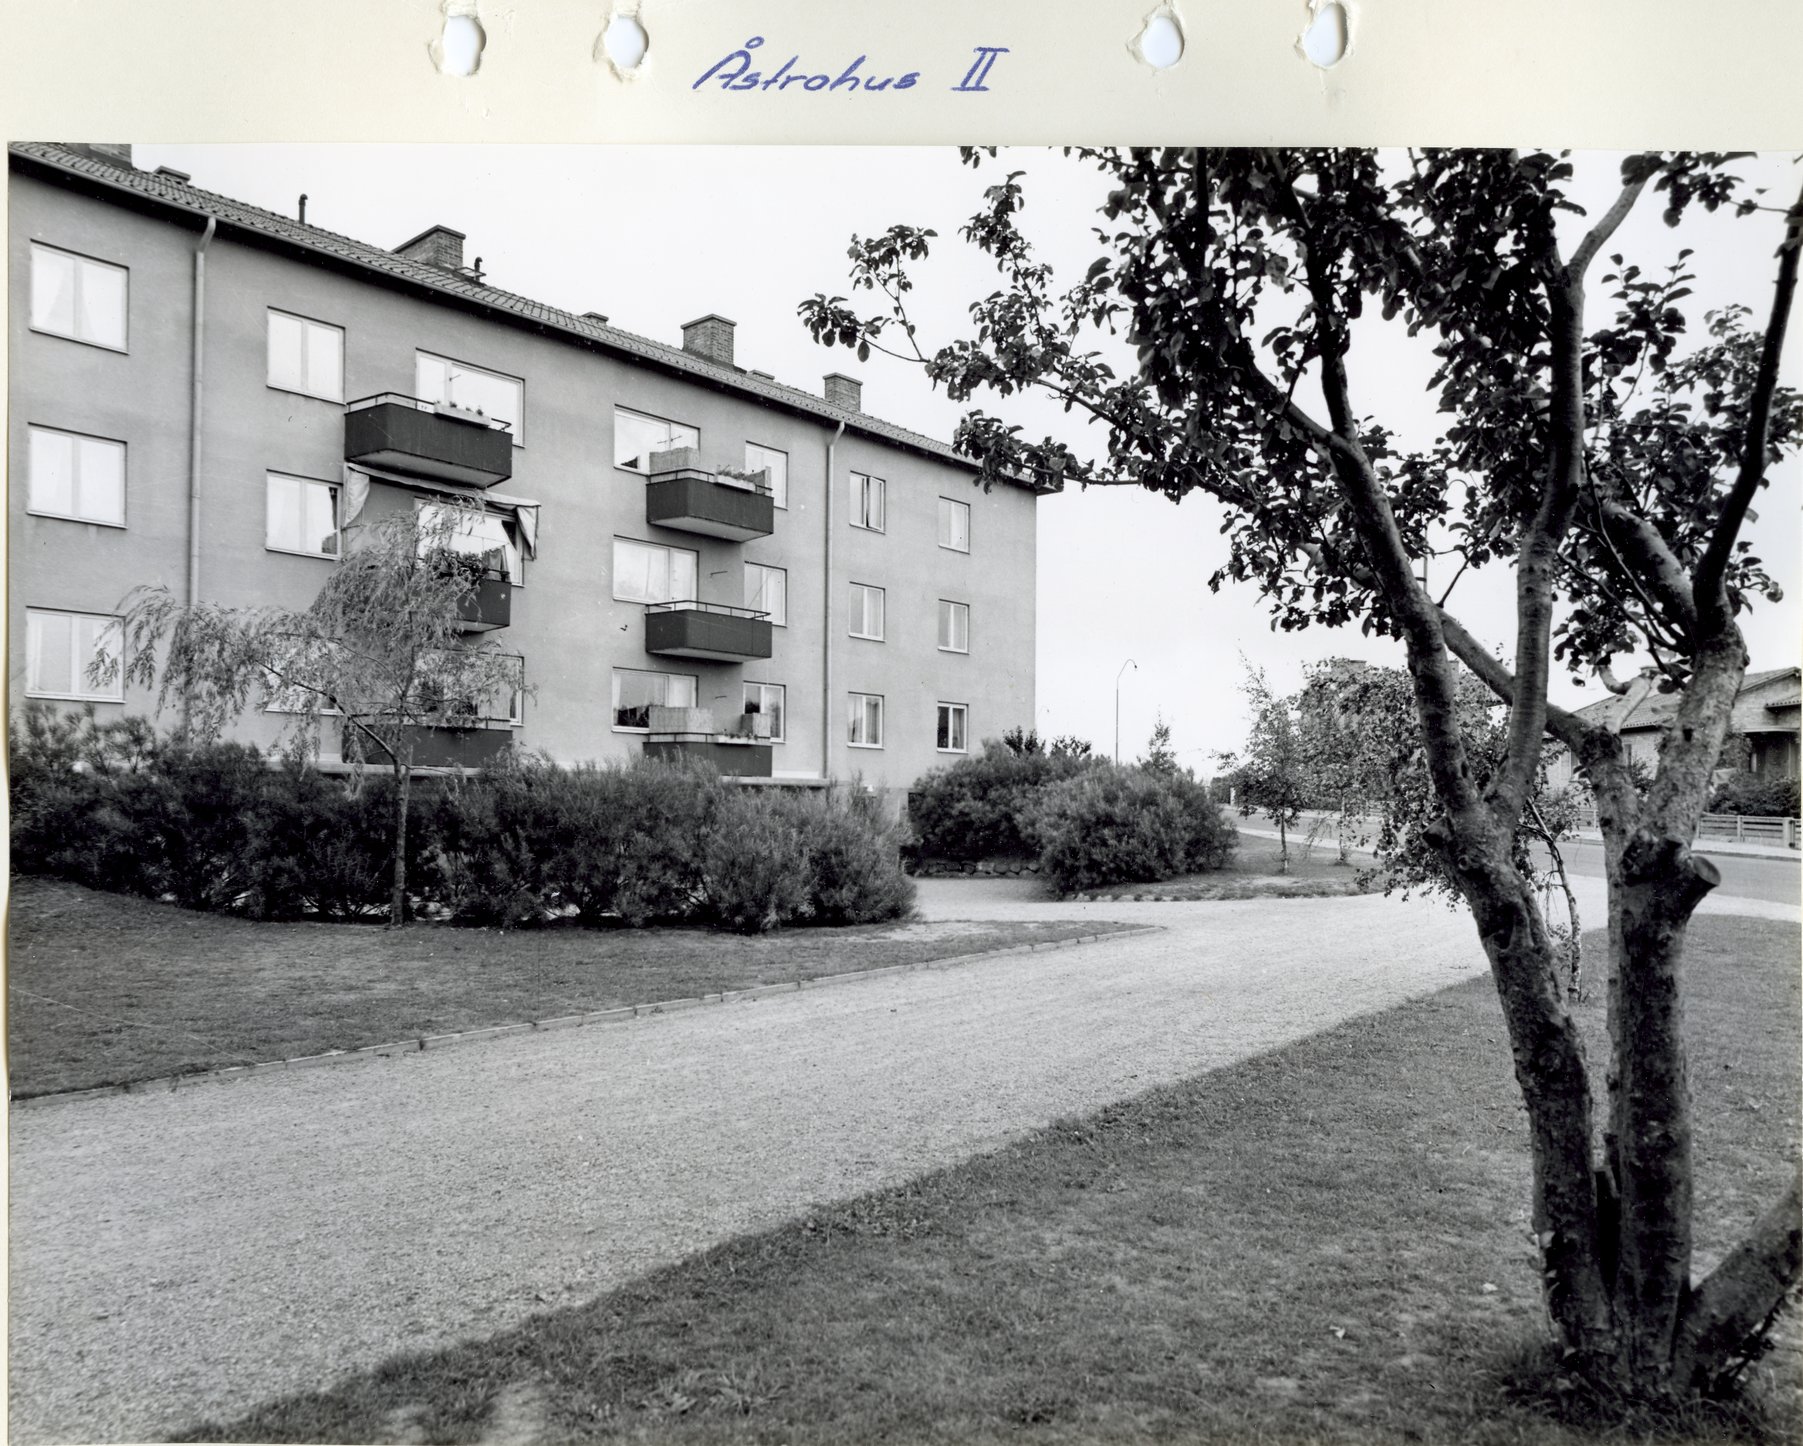 Bromölla Ågatan Åstrahus 2 1957